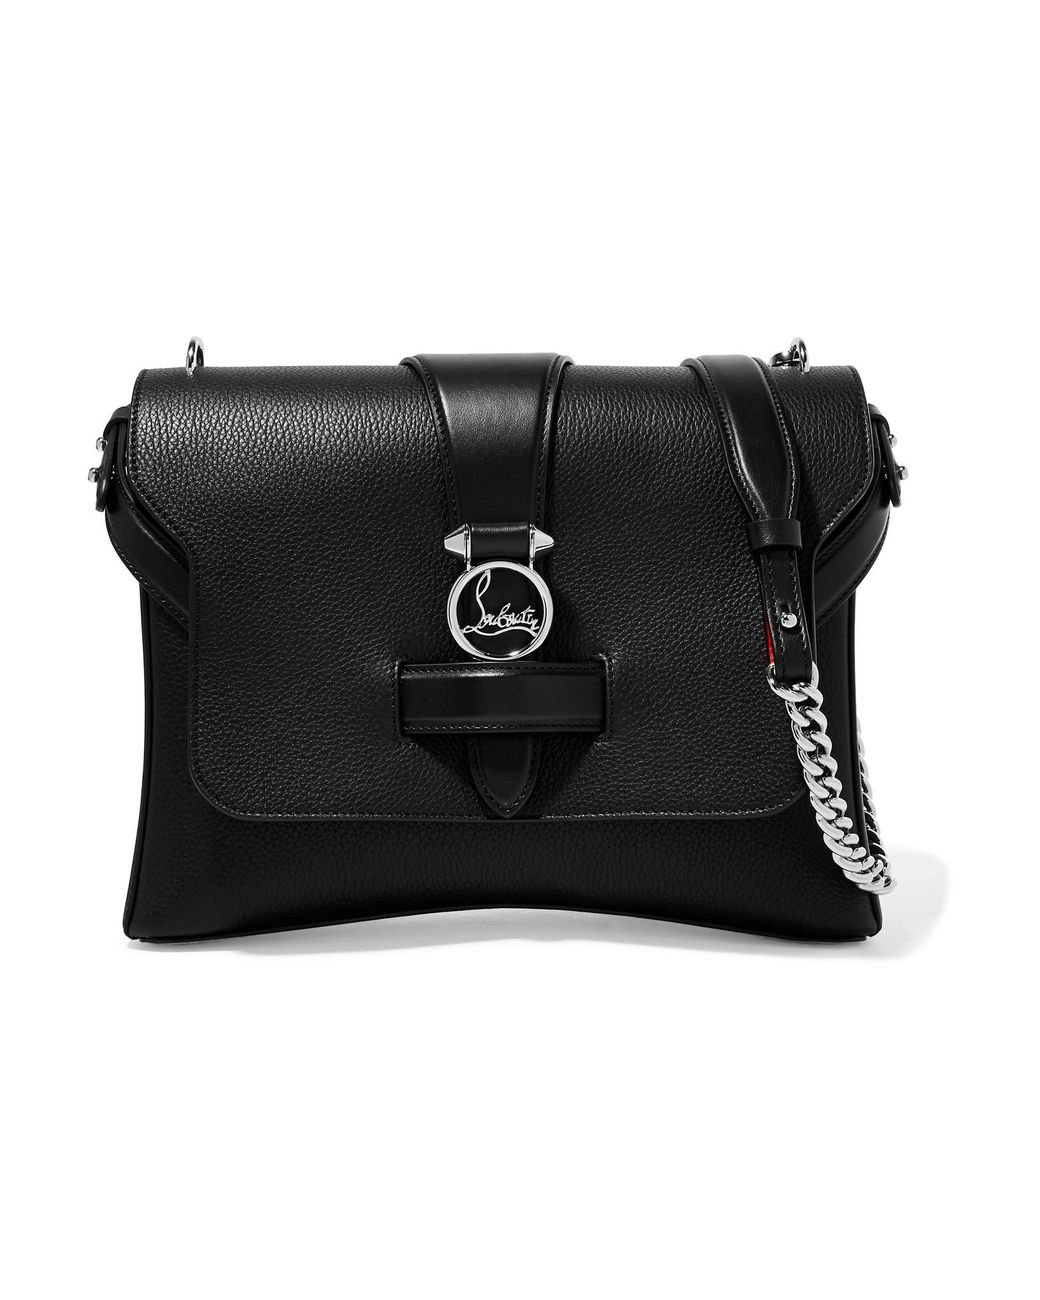 Christian Louboutin Rubylou Medium Textured-leather Shoulder Bag in Black |  Lyst